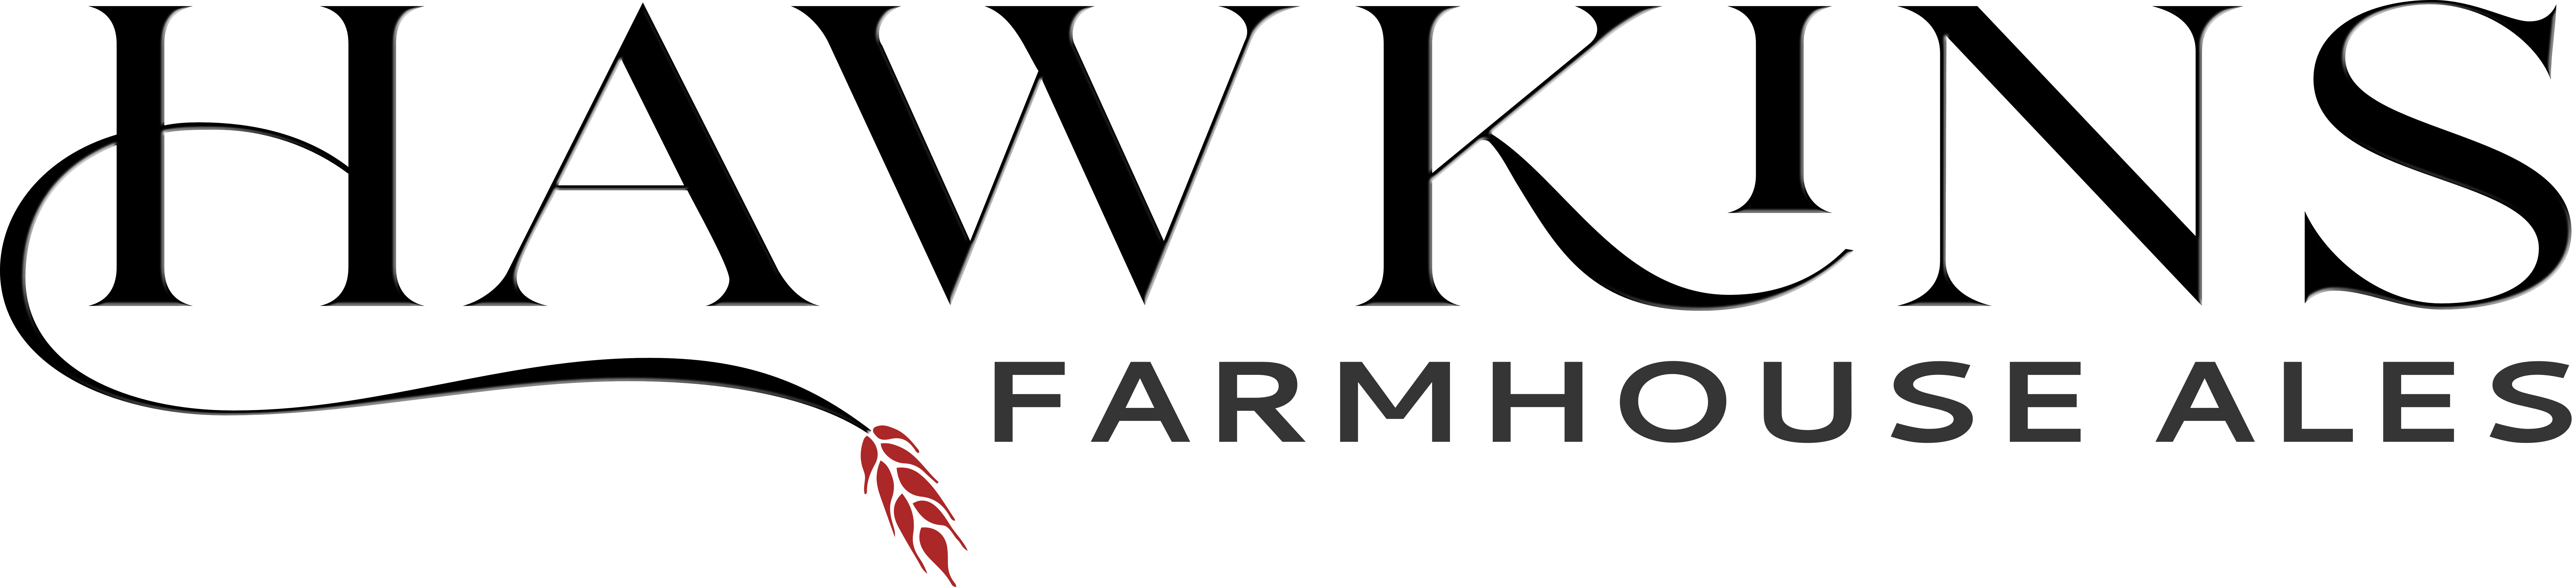 Hawkins Farmhouse Ales logo design